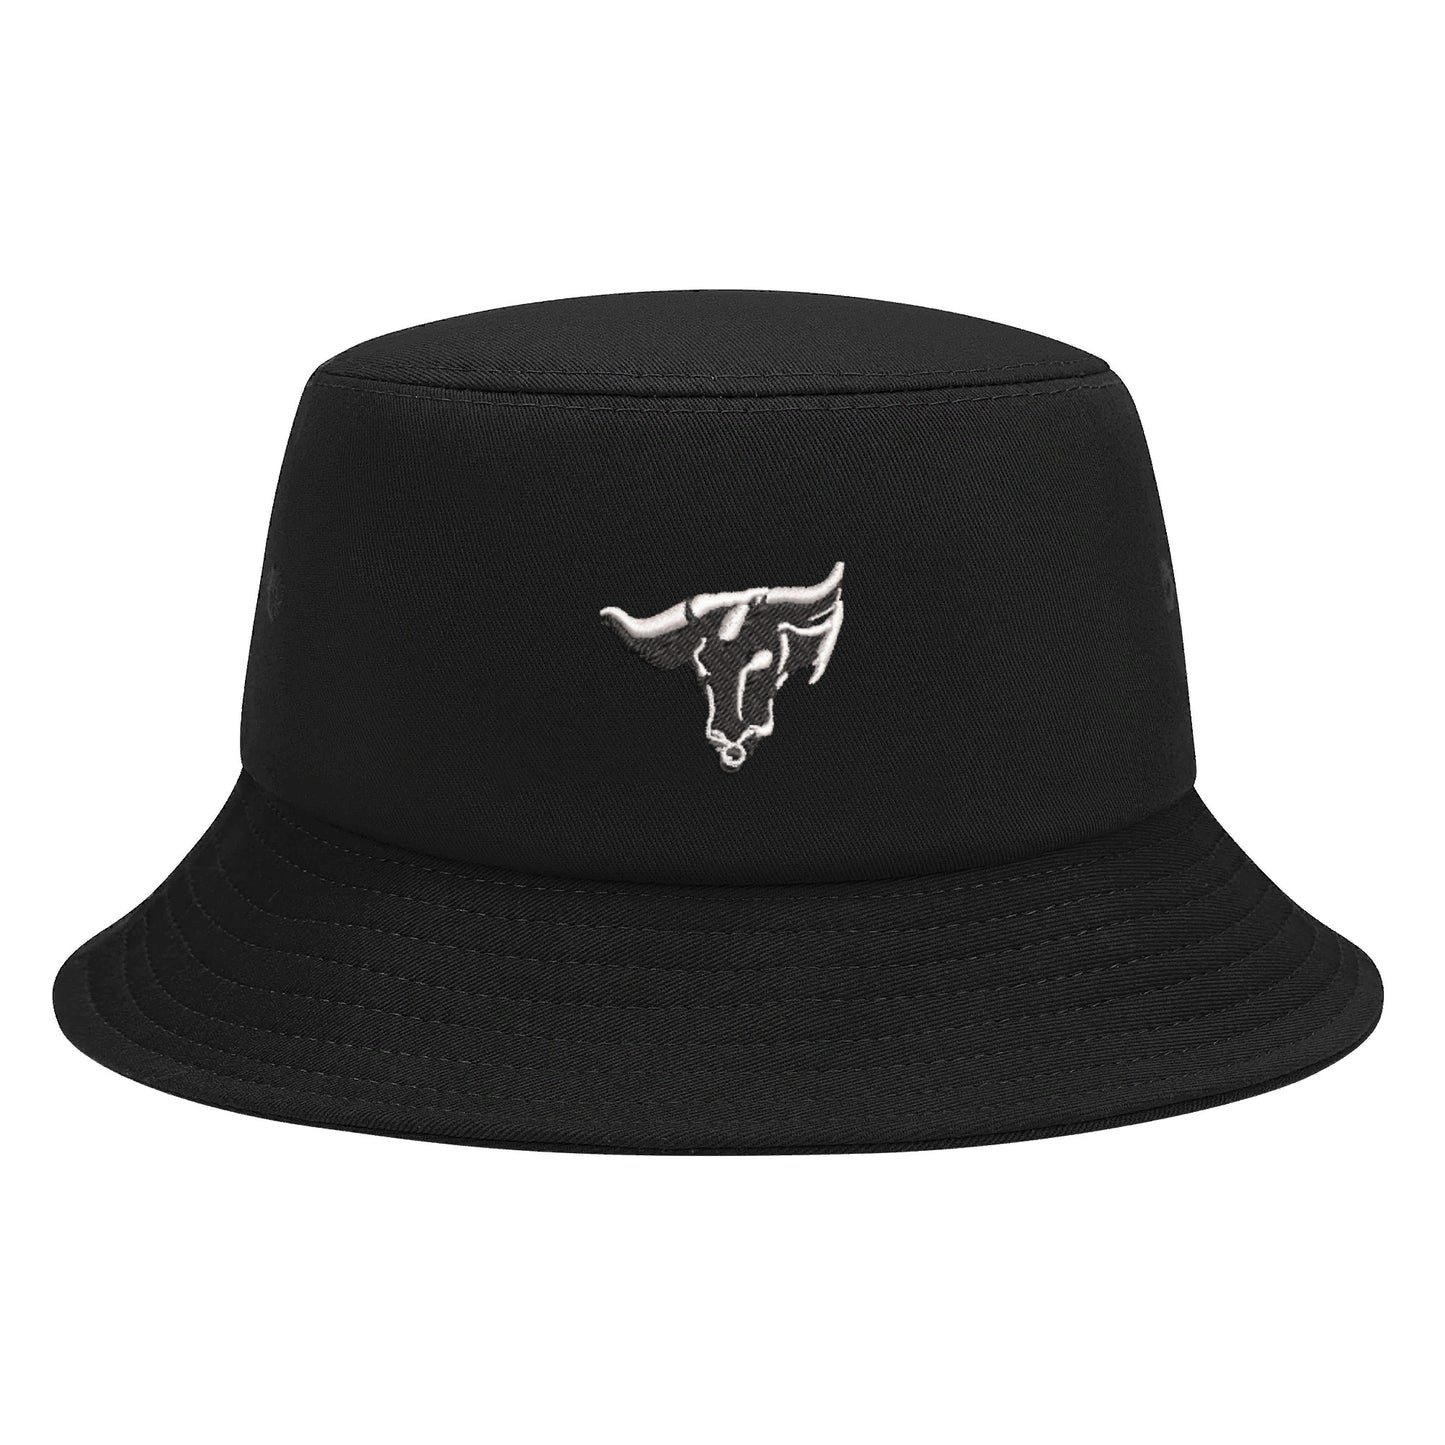 fz embroidered bucket hats black / universal